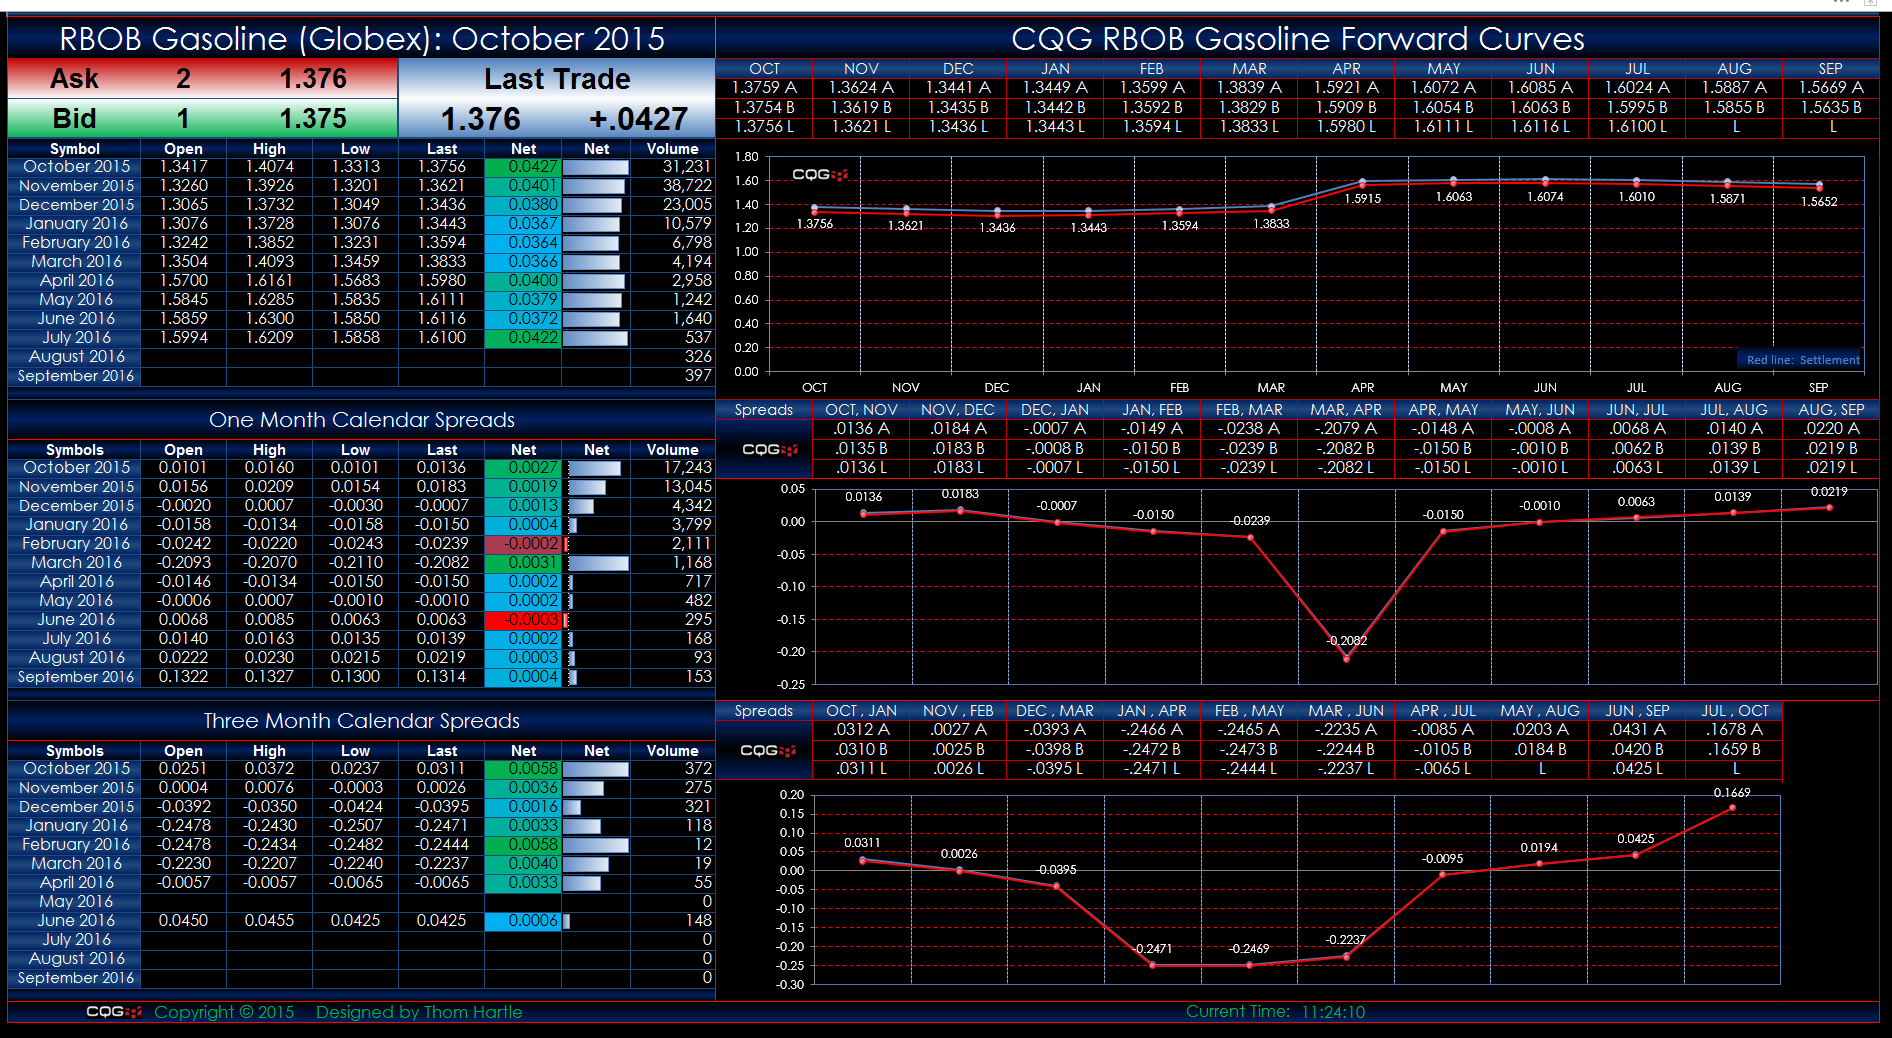 CQG Web Globex RBE Calendar Forward Curves Dashboard.PNG